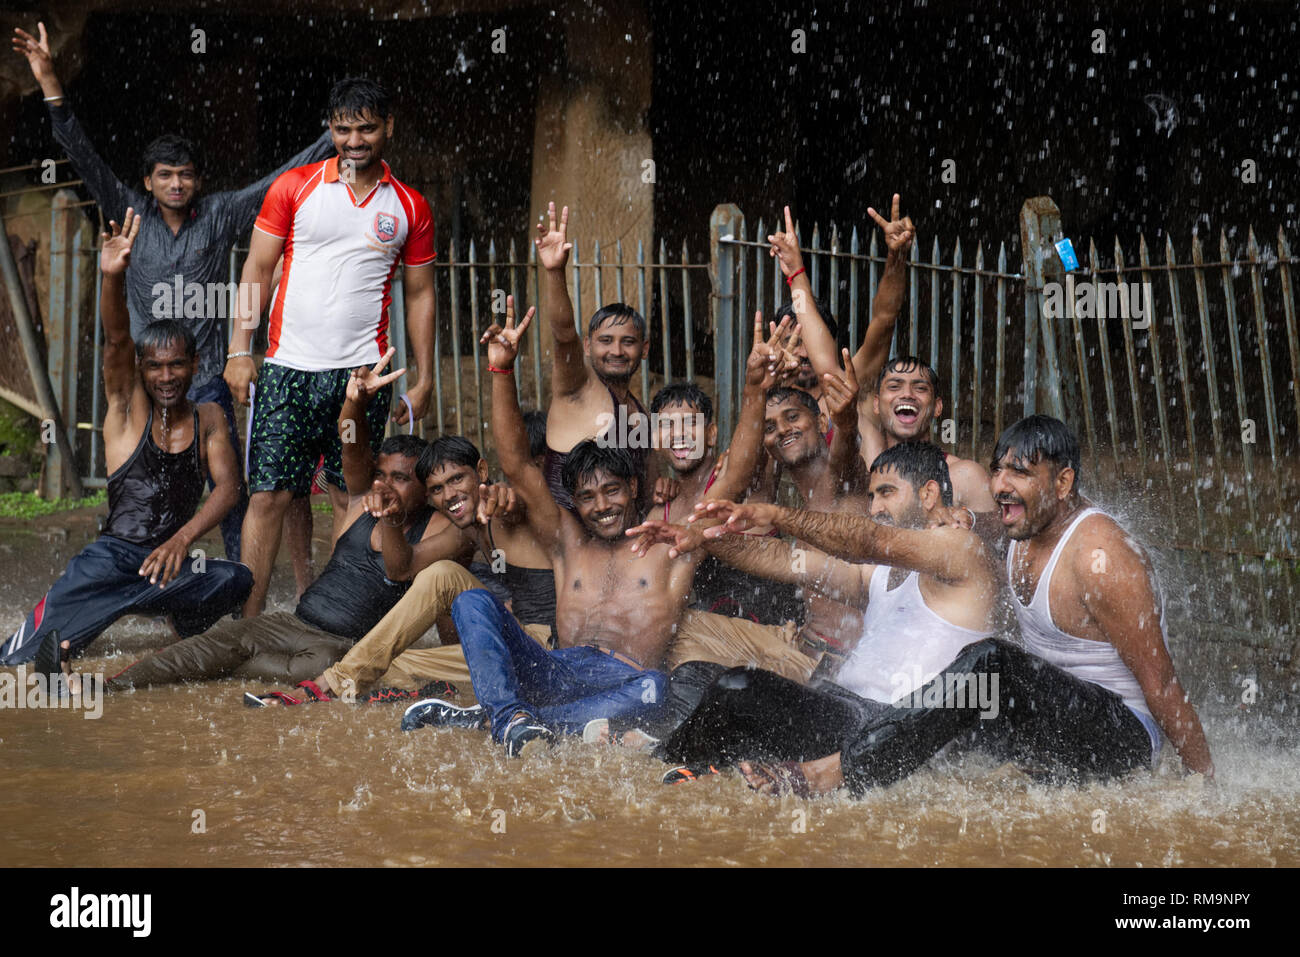 Un alegre grupo que goza de las lluvias monzónicas. Celebrando el clima de Mumbai. Foto de stock